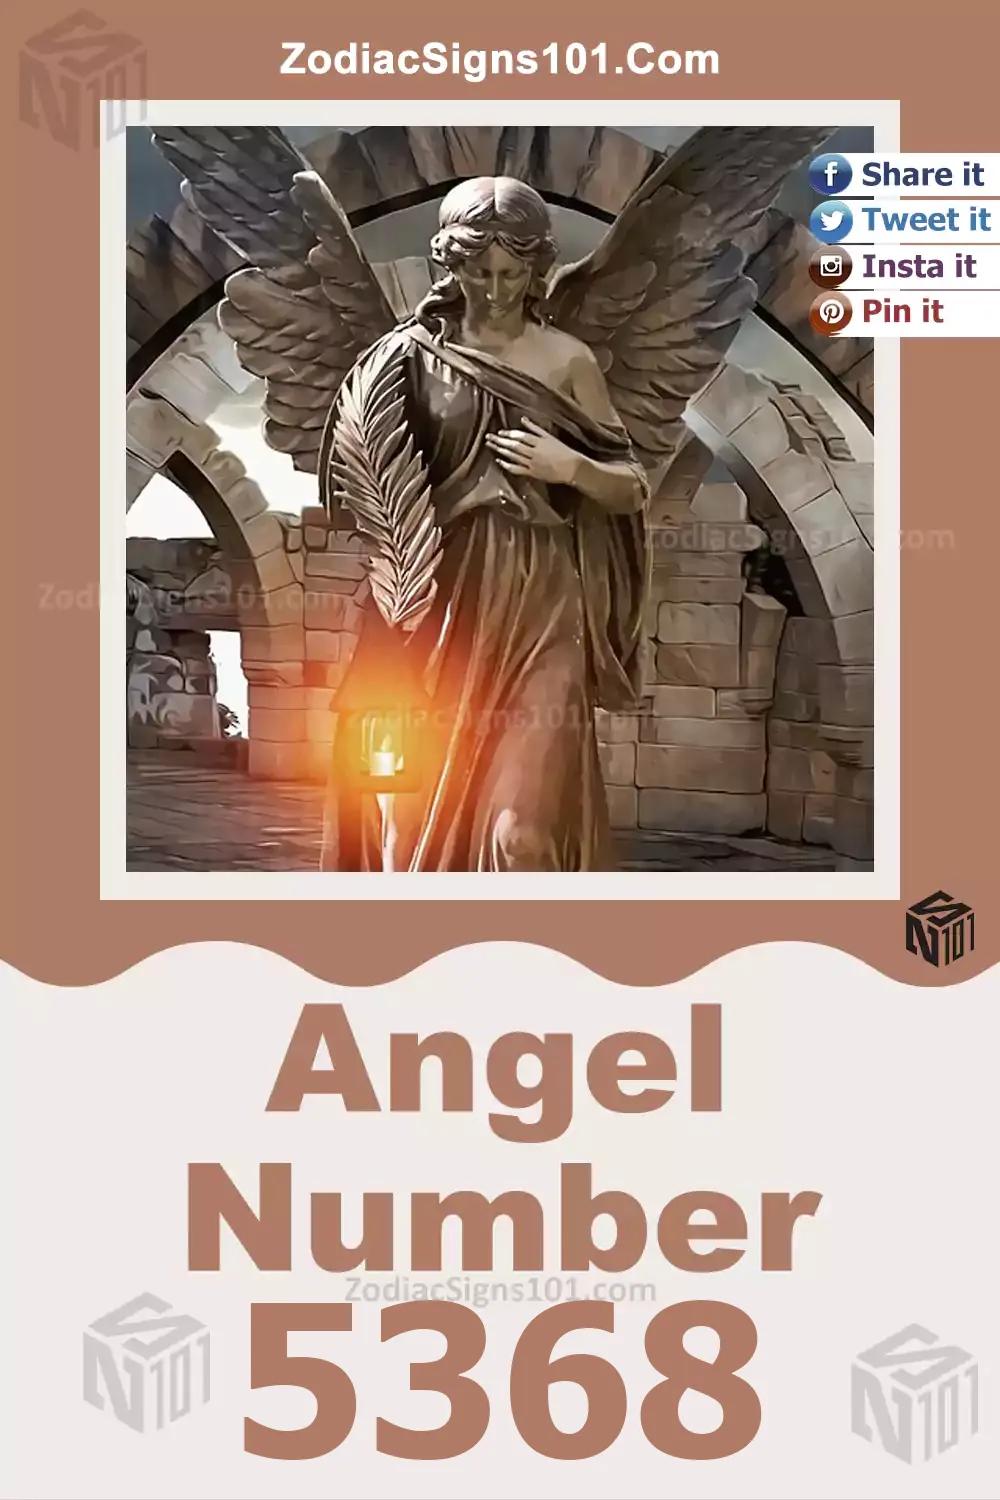 5368-Angel-Number-Meaning.jpg